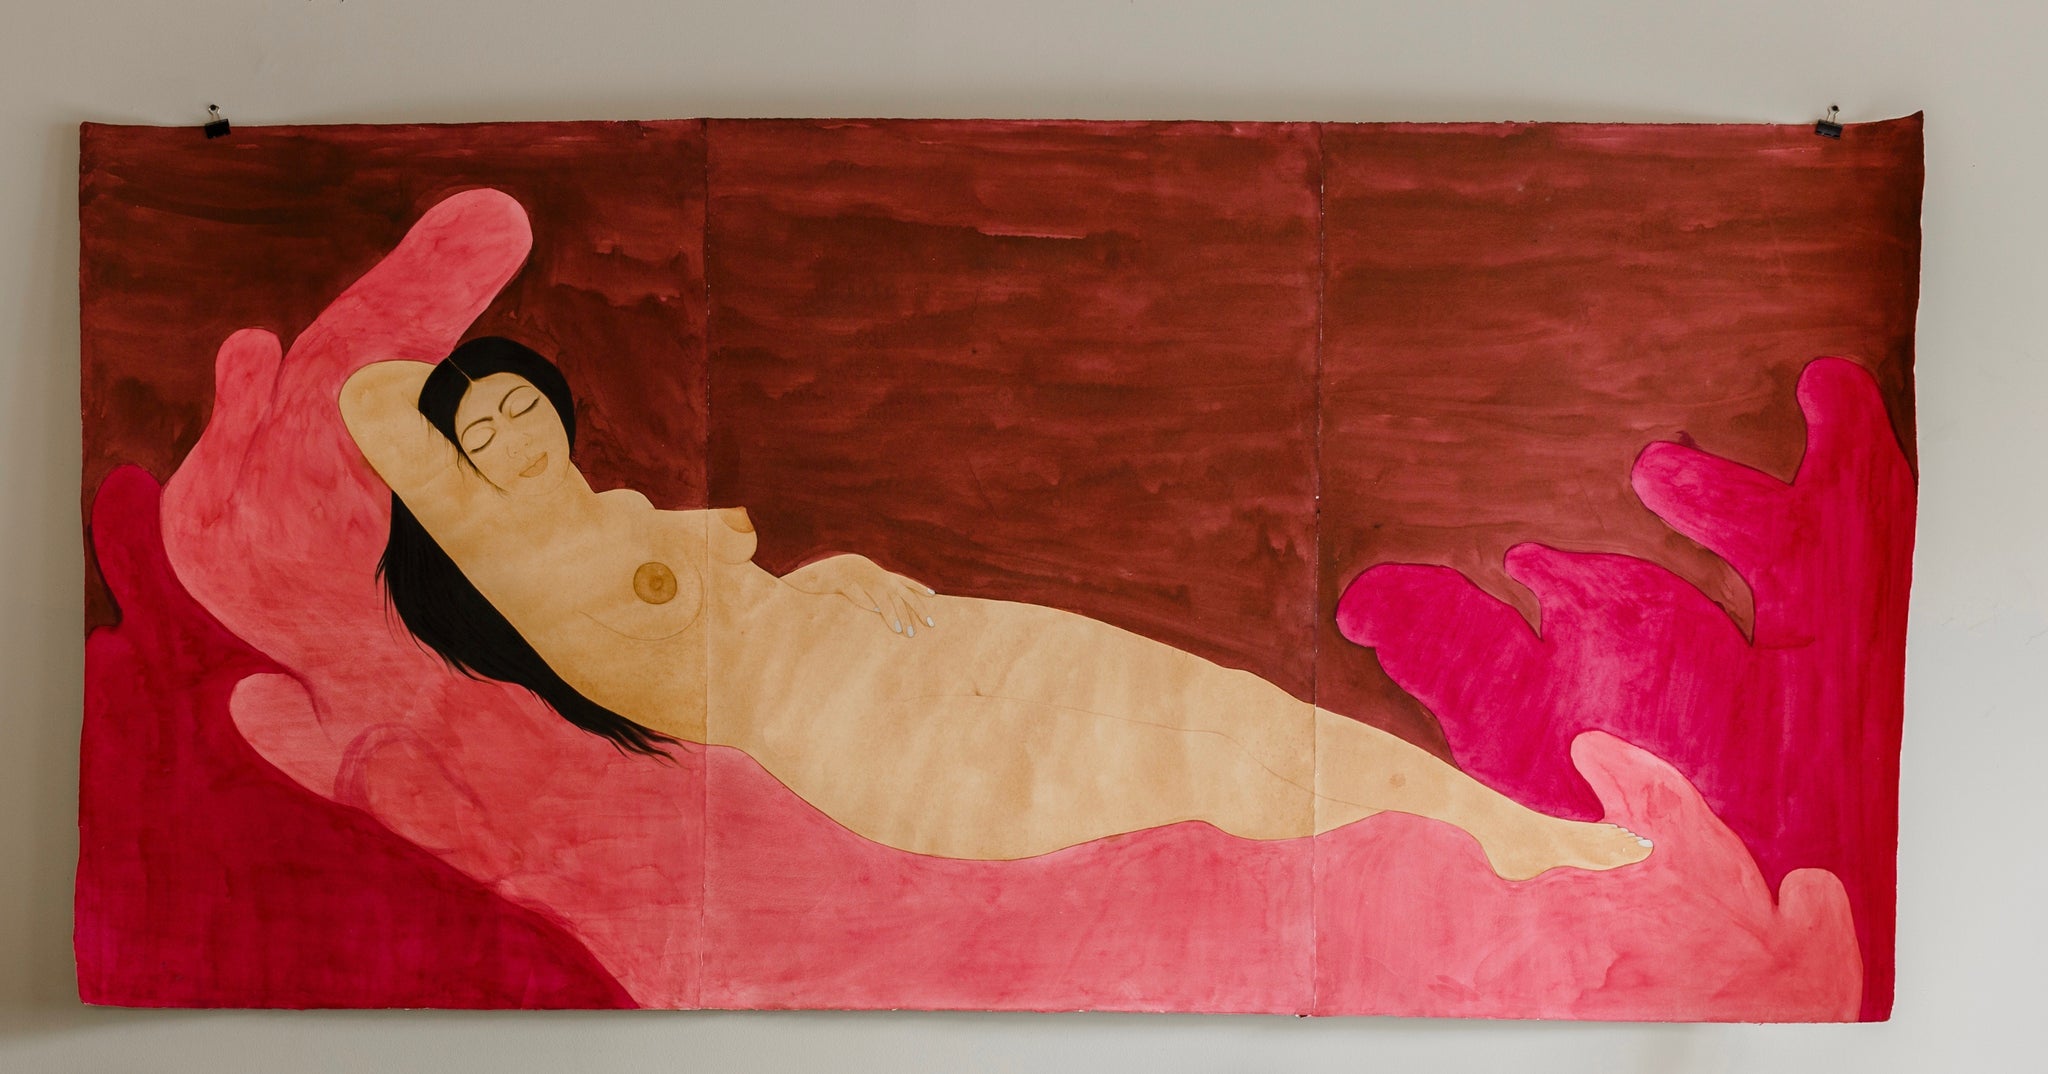 Hiba Schahbaz, "Self Portrait as Sleeping Venus (after Giorgione)"